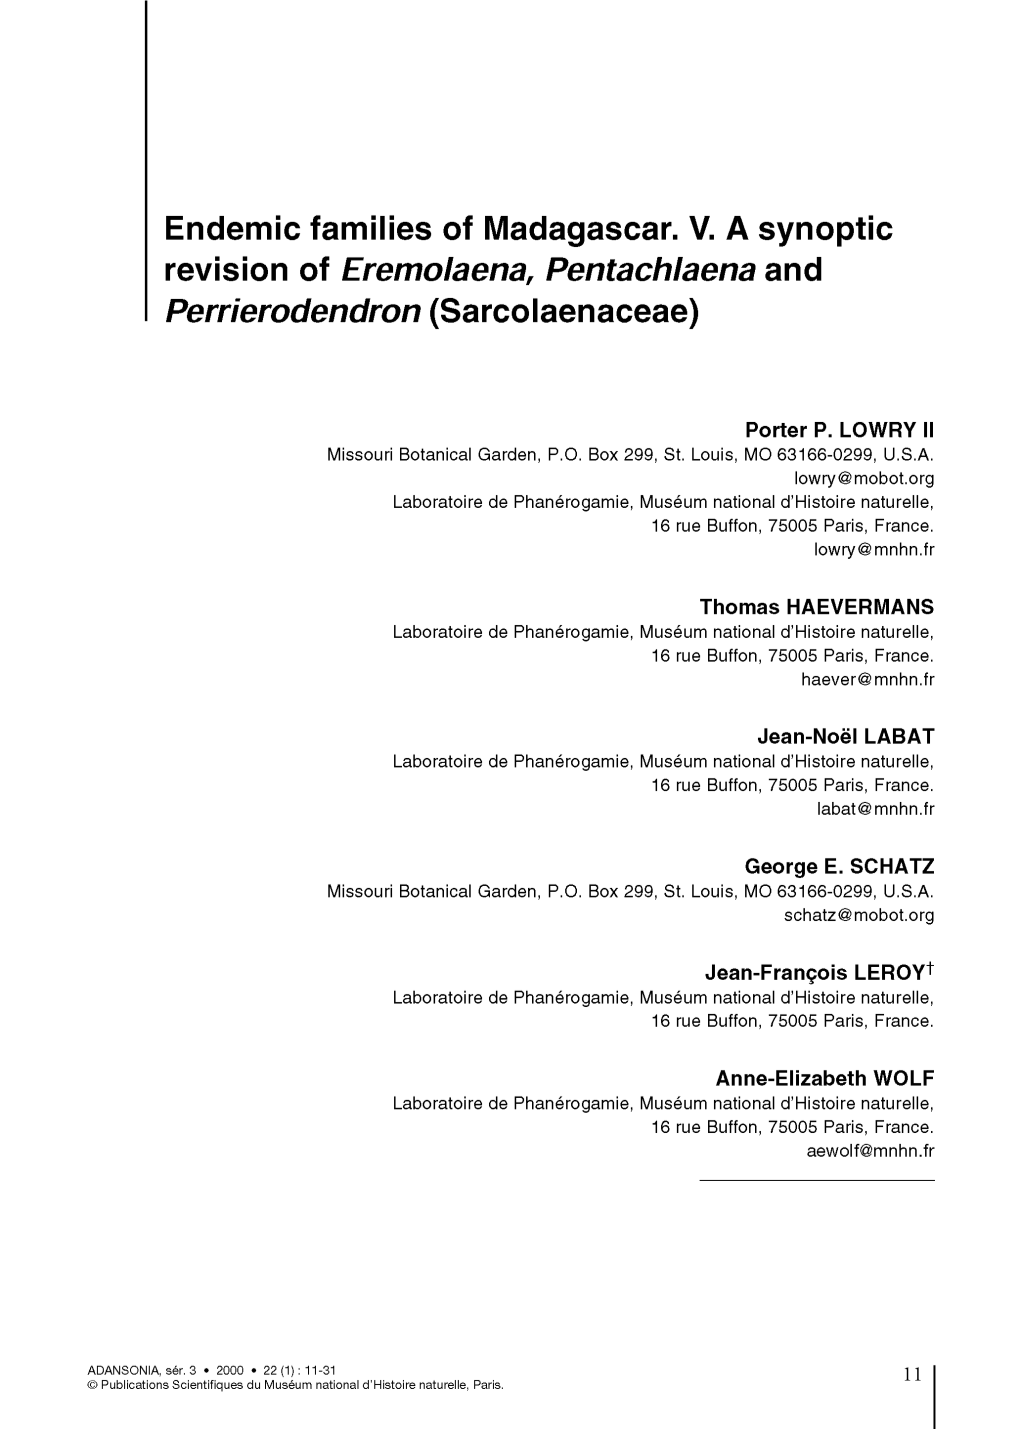 Endemie Families of Madagascar. V. a Synoptic Revision of Eremoiaena